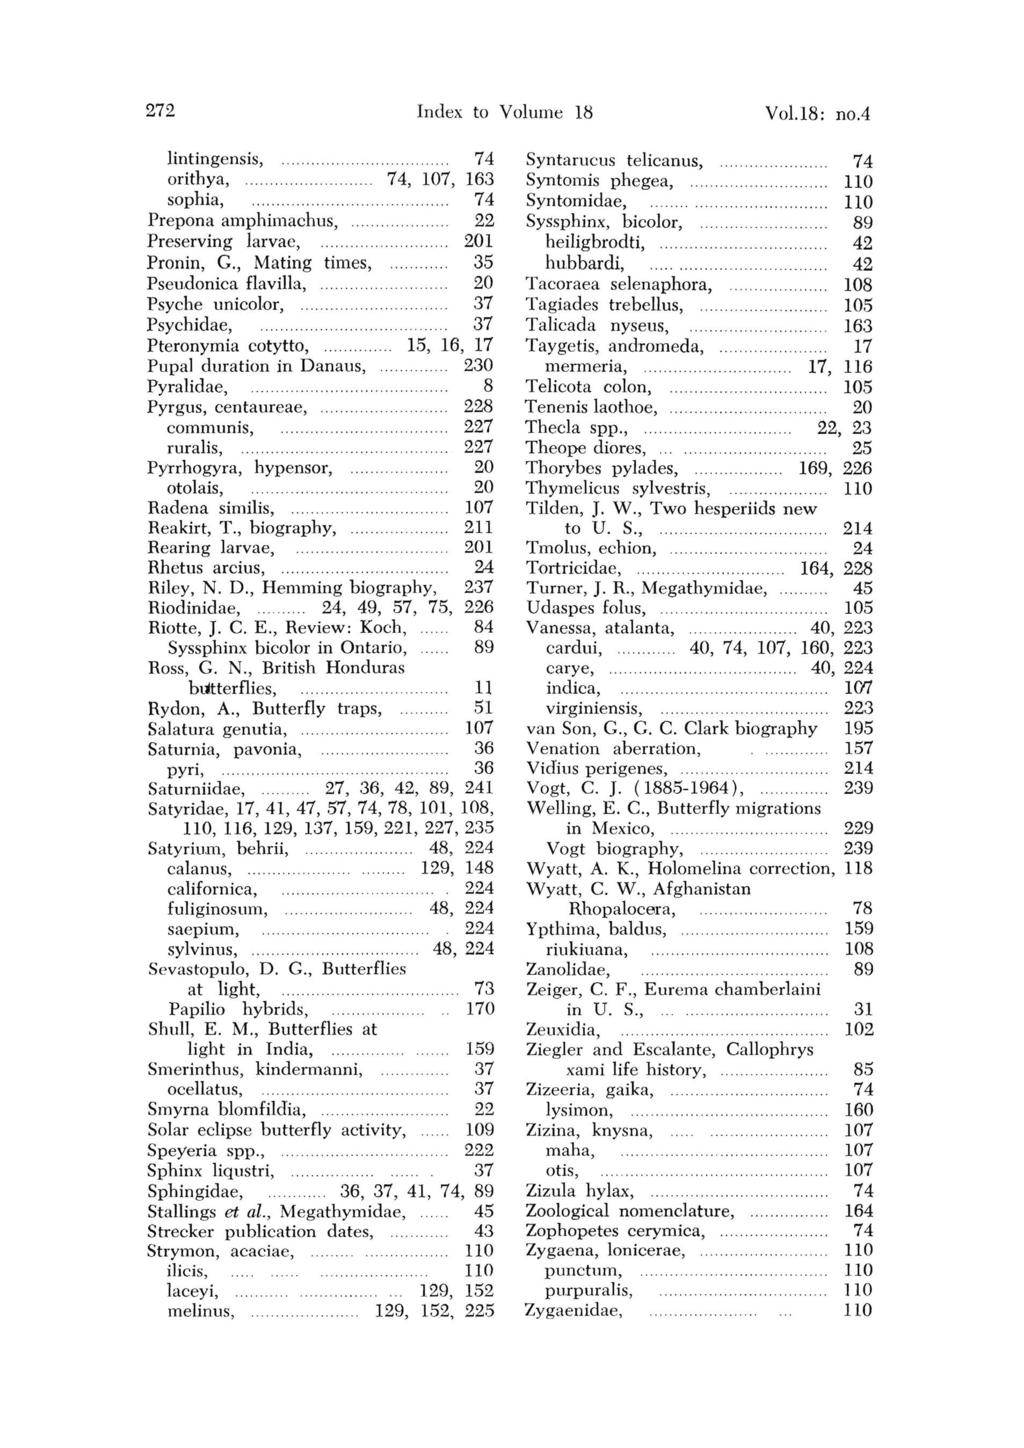 272 Index to Volume Vo1.l8: no.4 lintingensis, orithya, sophia, Prepona amphimachus, Preserving larvac, Pronin, G., Mating times, Pseudonica lavilla, Psyche unicolor, Psychidae,........ ".